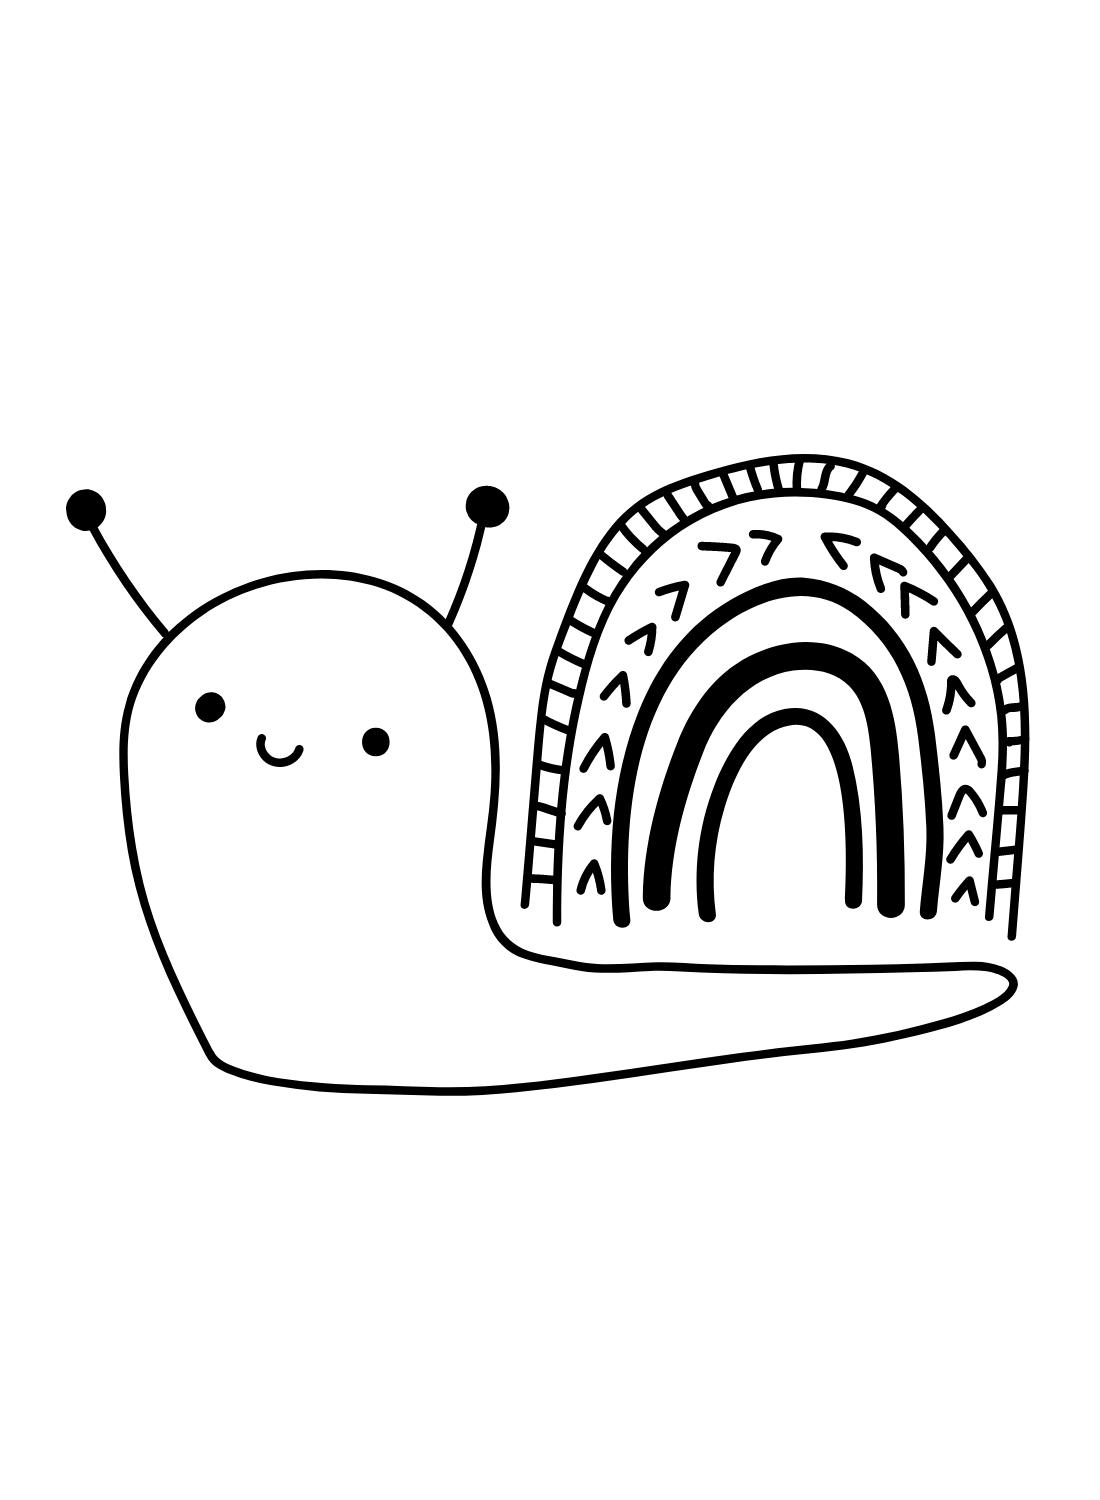 Imprimer un escargot à partir d'un escargot